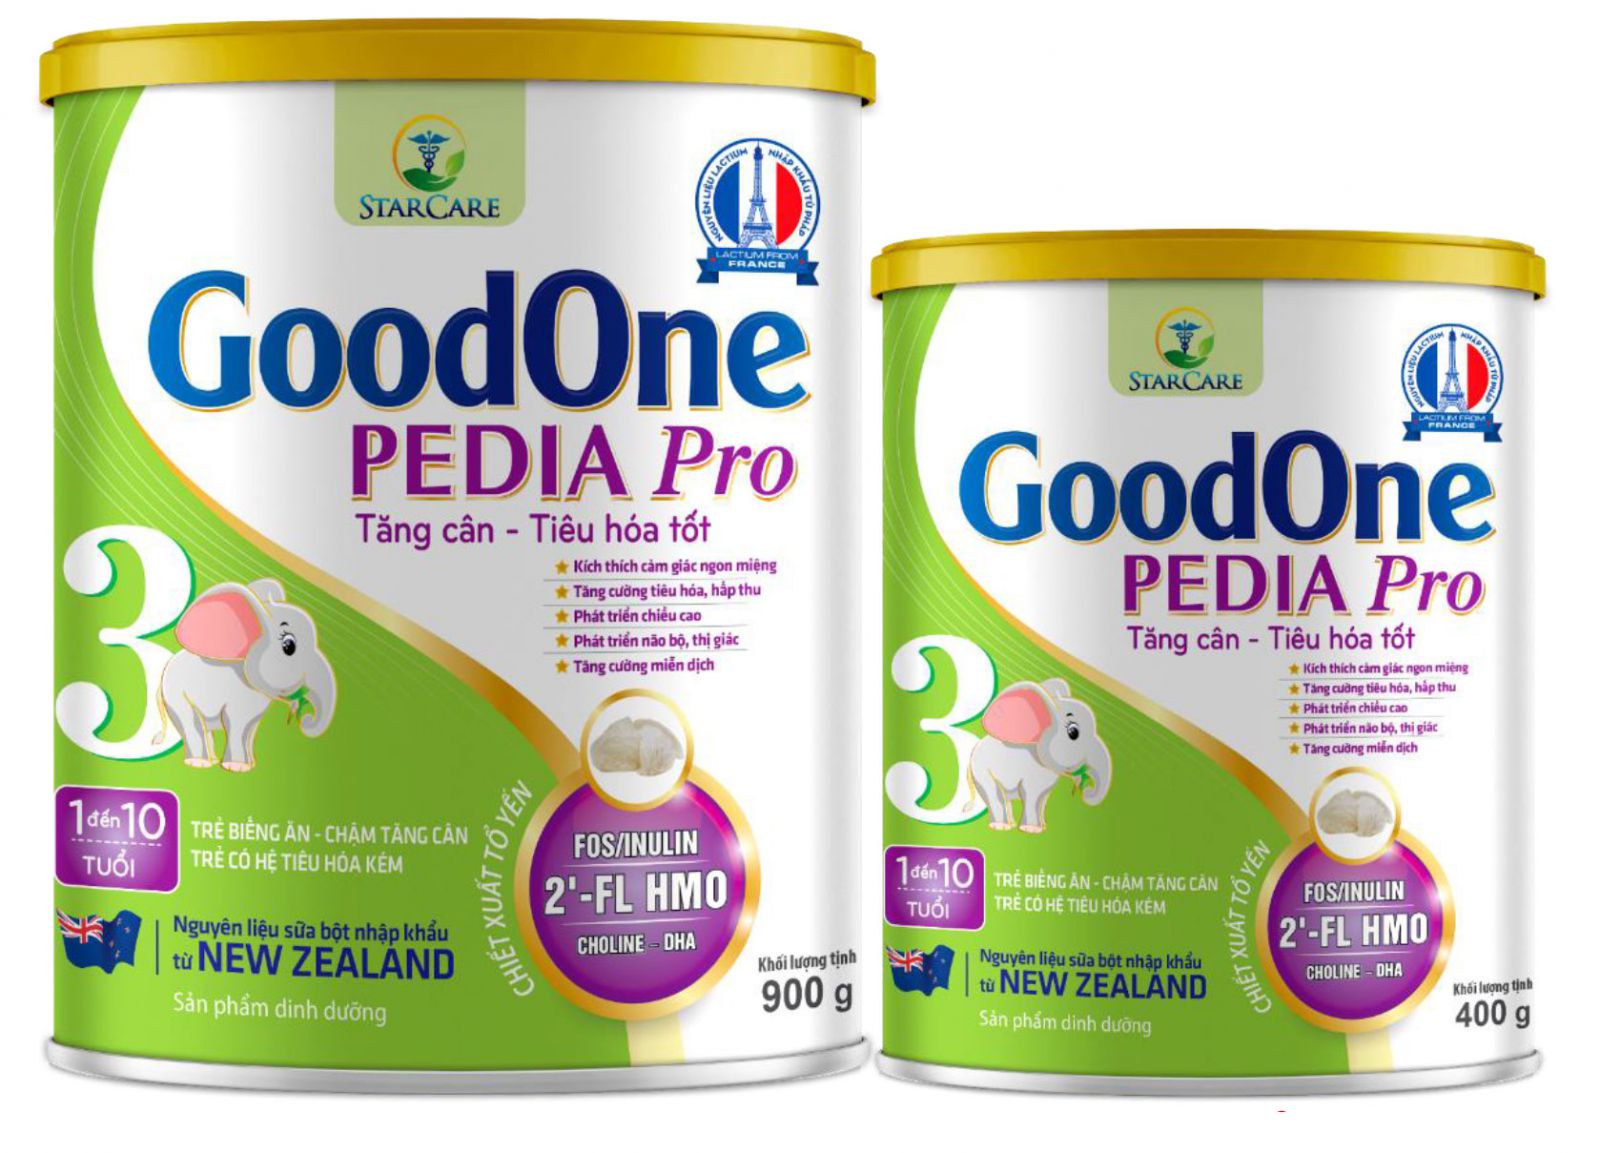 GoodOne Pedia Pro 3 